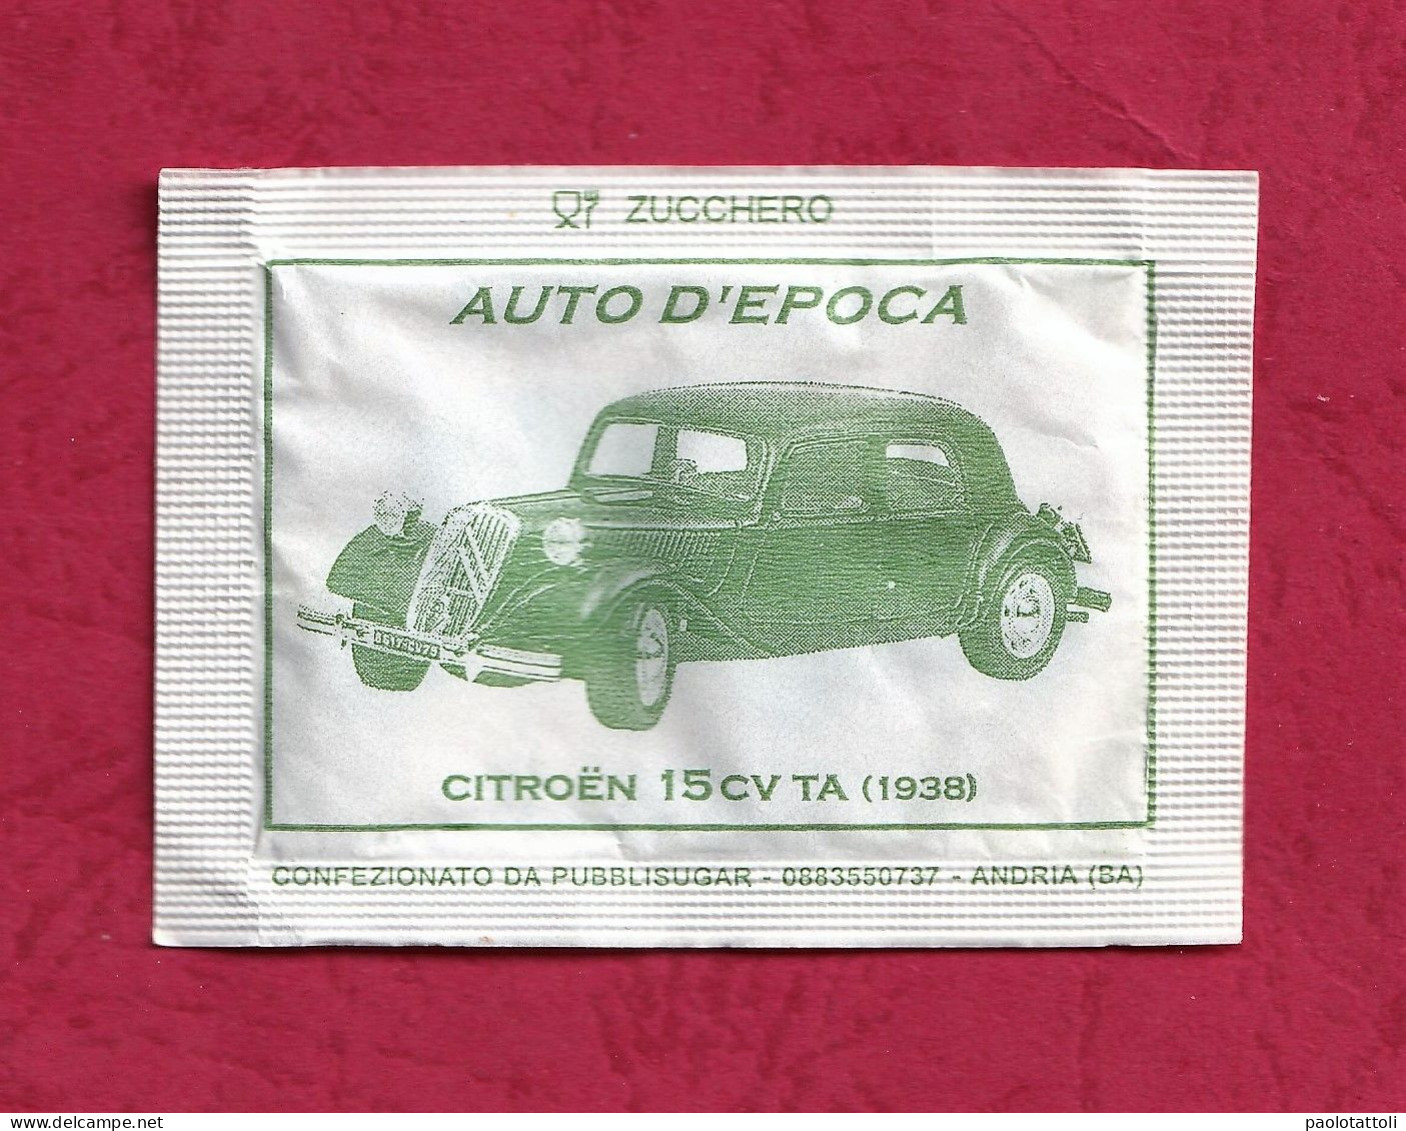 Bustina Vuota Zucchero. Empty Sugar Bag- Cars. Auto D'epoca, Citroen 15 Cv TA-1938. Packed By Pubblisugar, Andria. BA. - Sugars